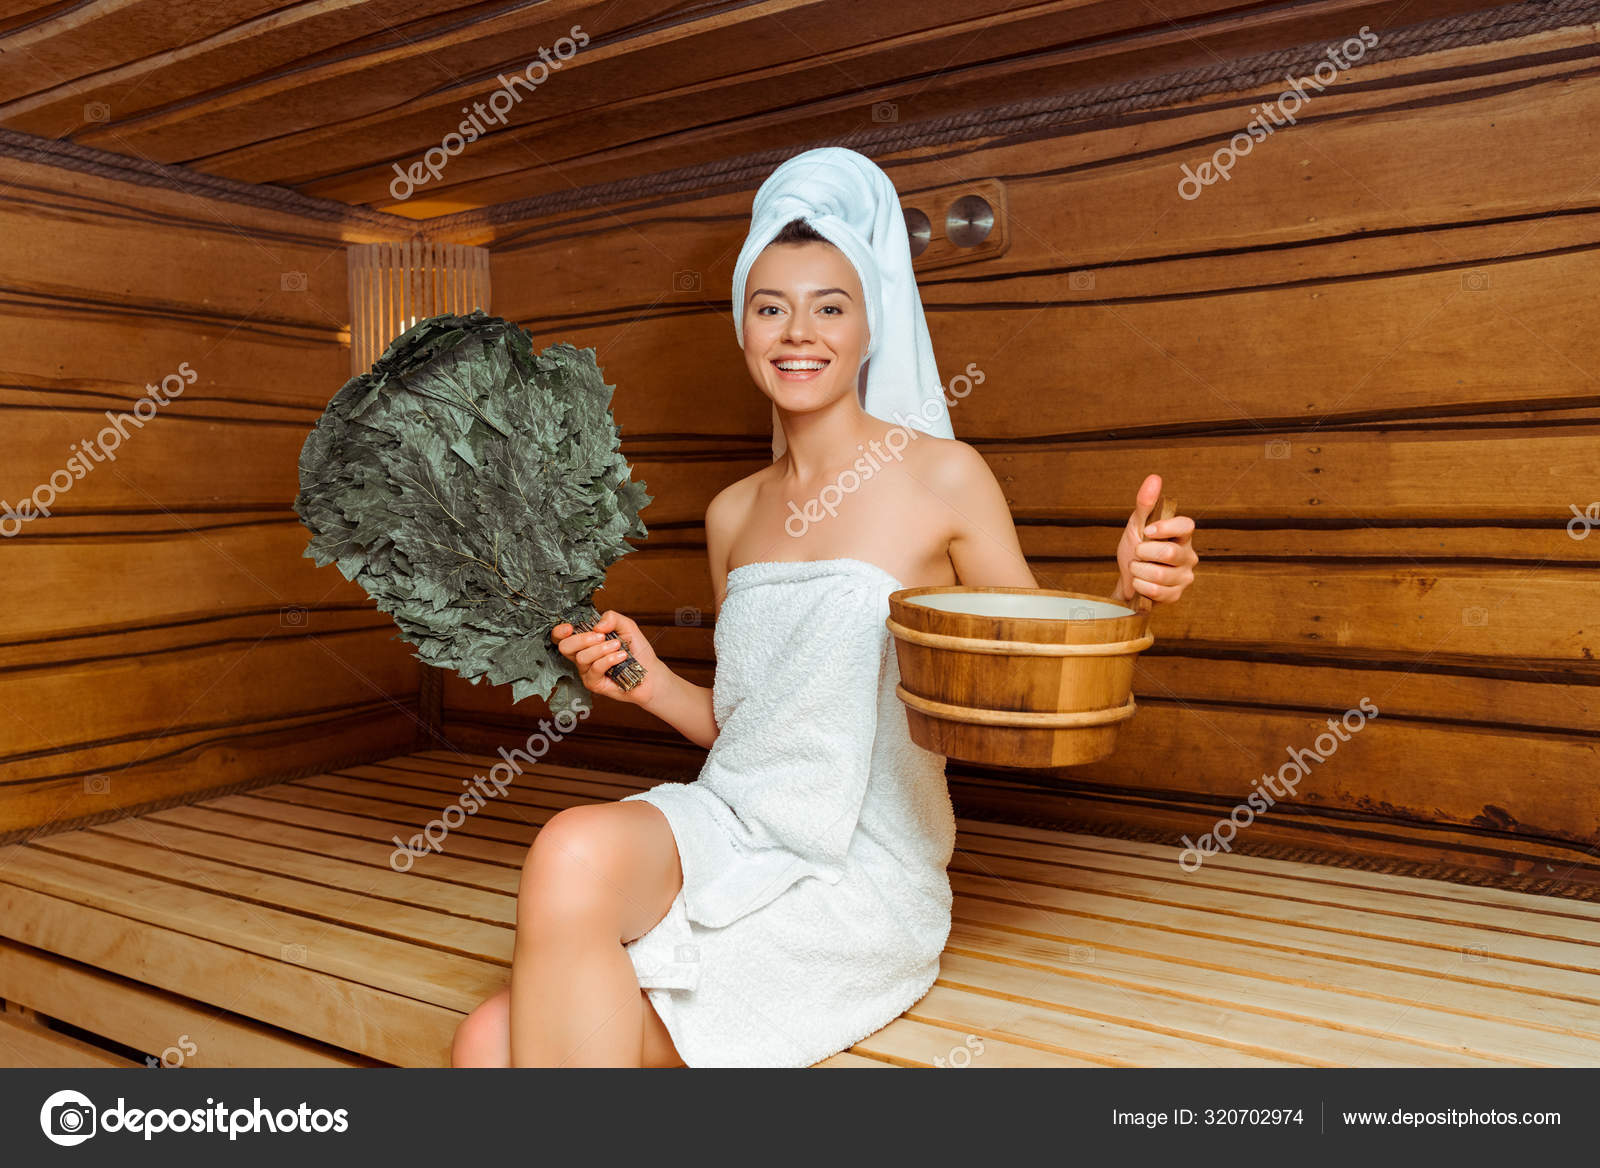 https://st3.depositphotos.com/12982378/32070/i/1600/depositphotos_320702974-stock-photo-smiling-woman-towels-holding-birch.jpg